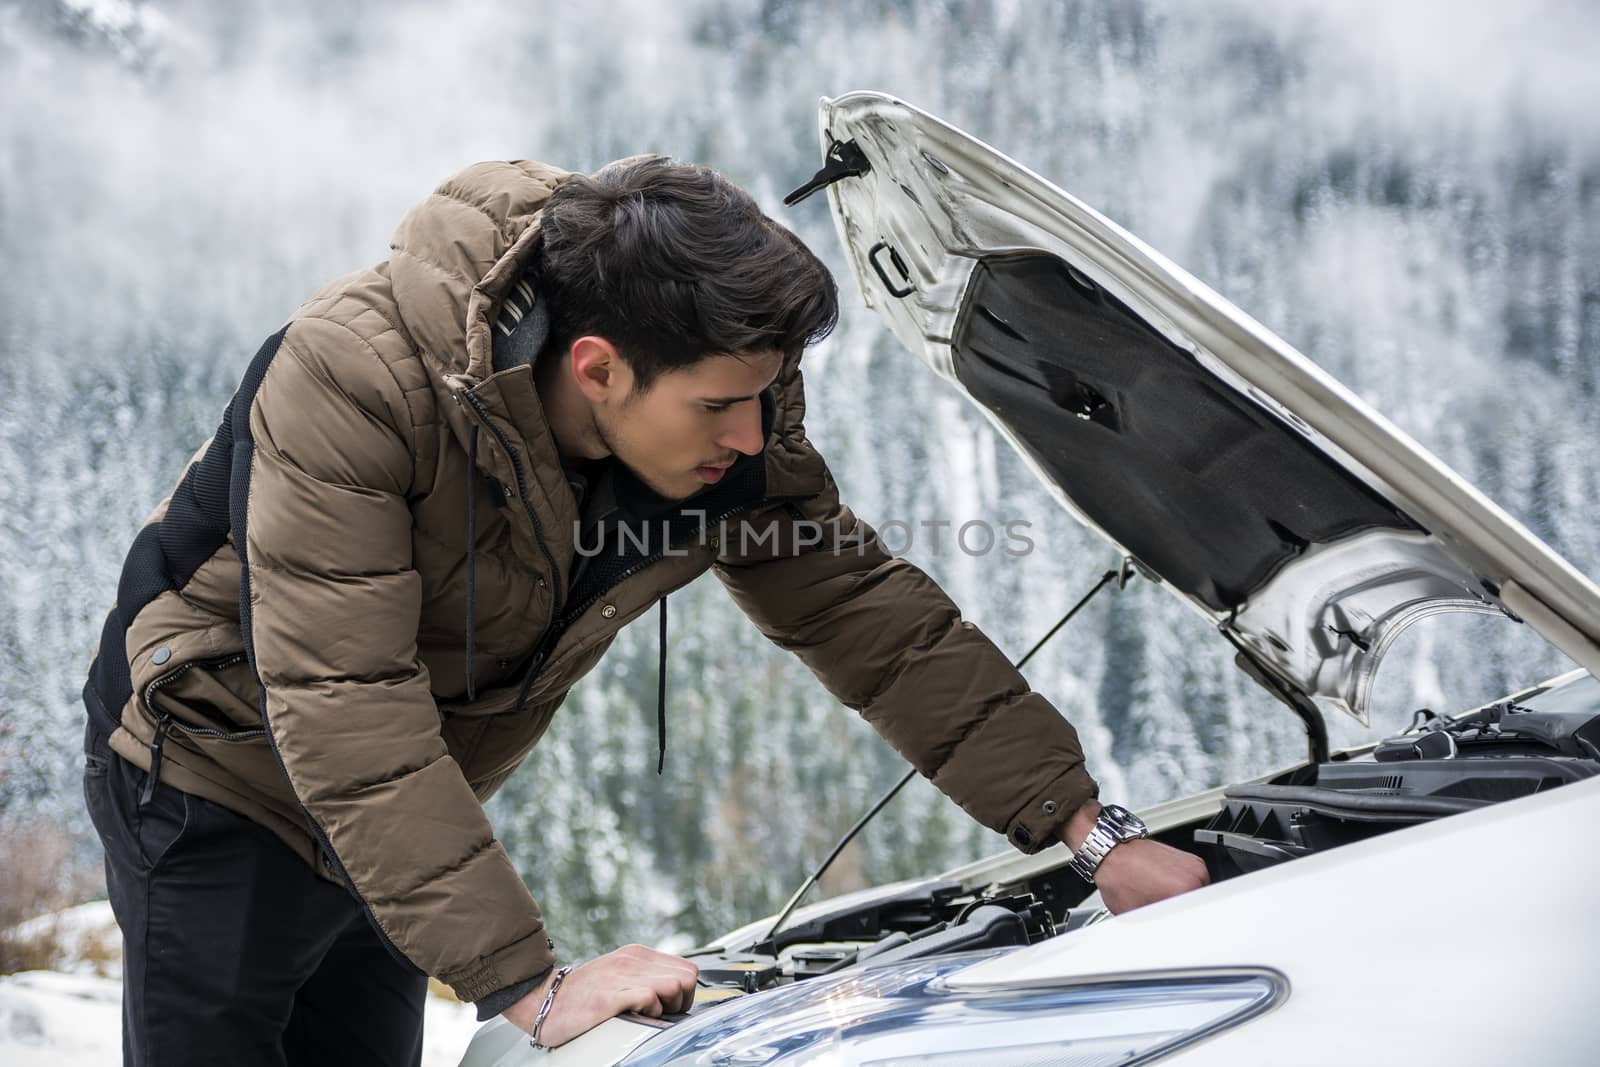 Man inspecting car engine by artofphoto